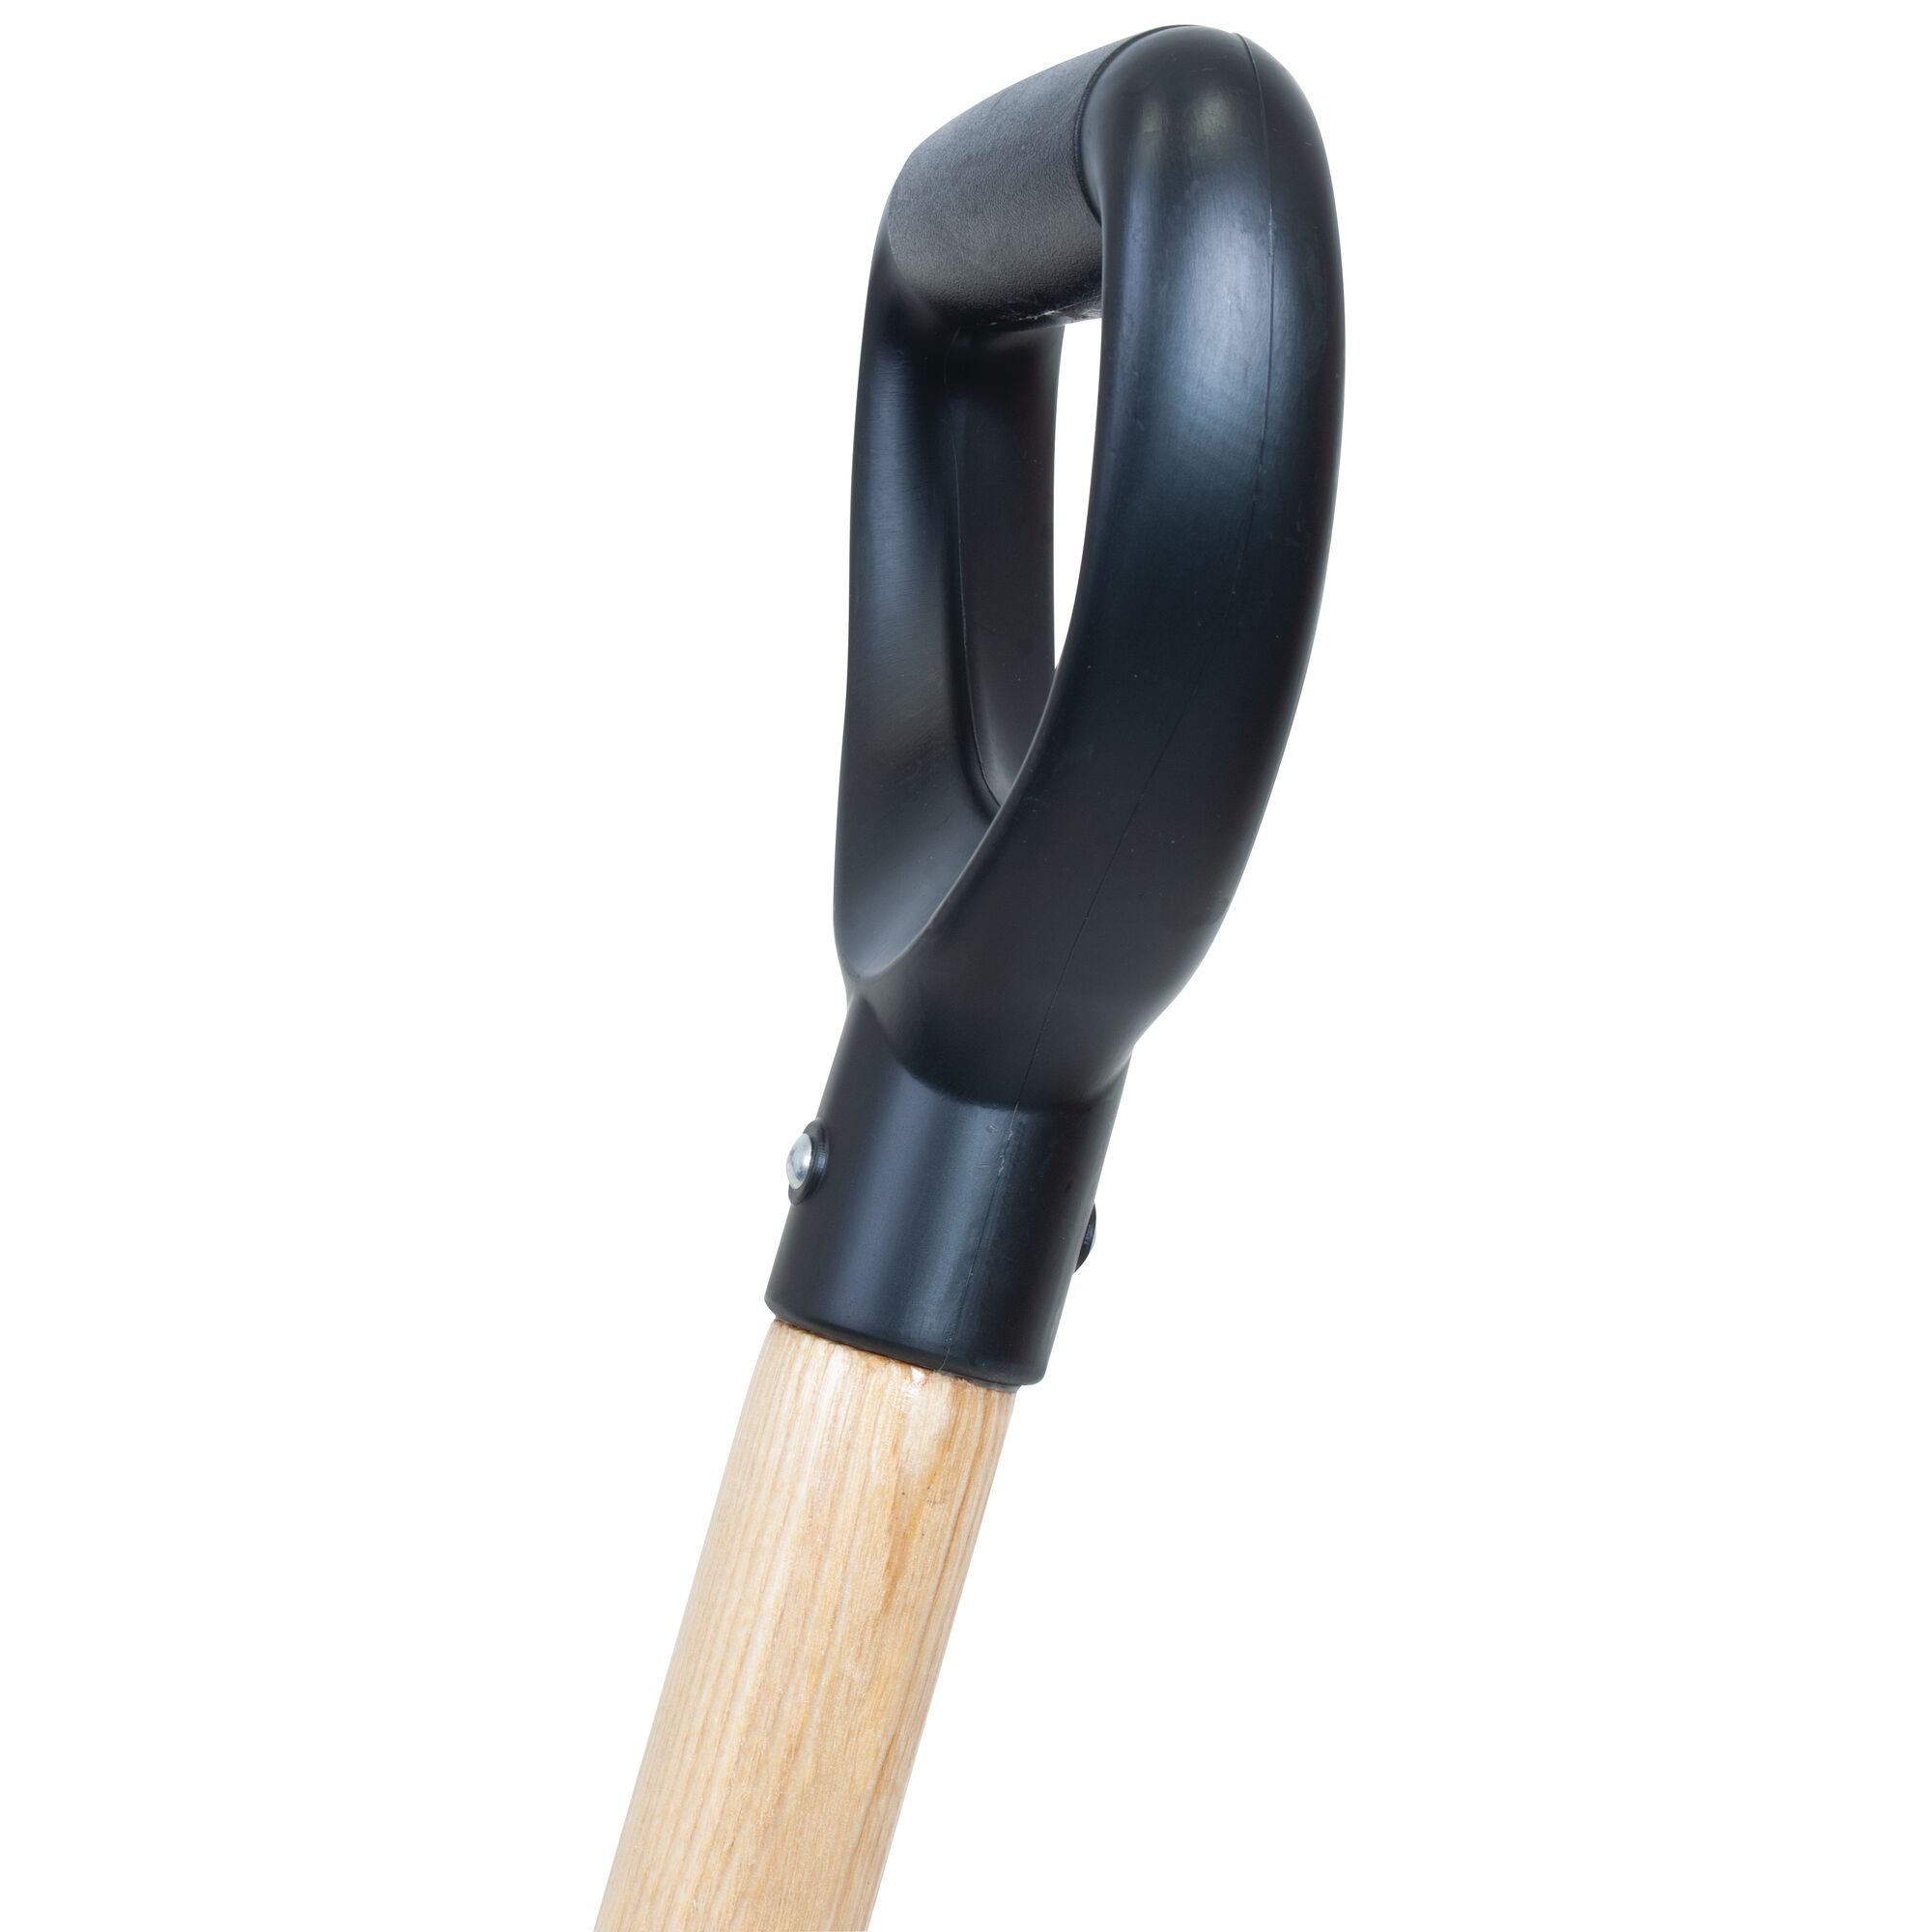 Ergonomic D grip handle feature in wood handle digging fork.